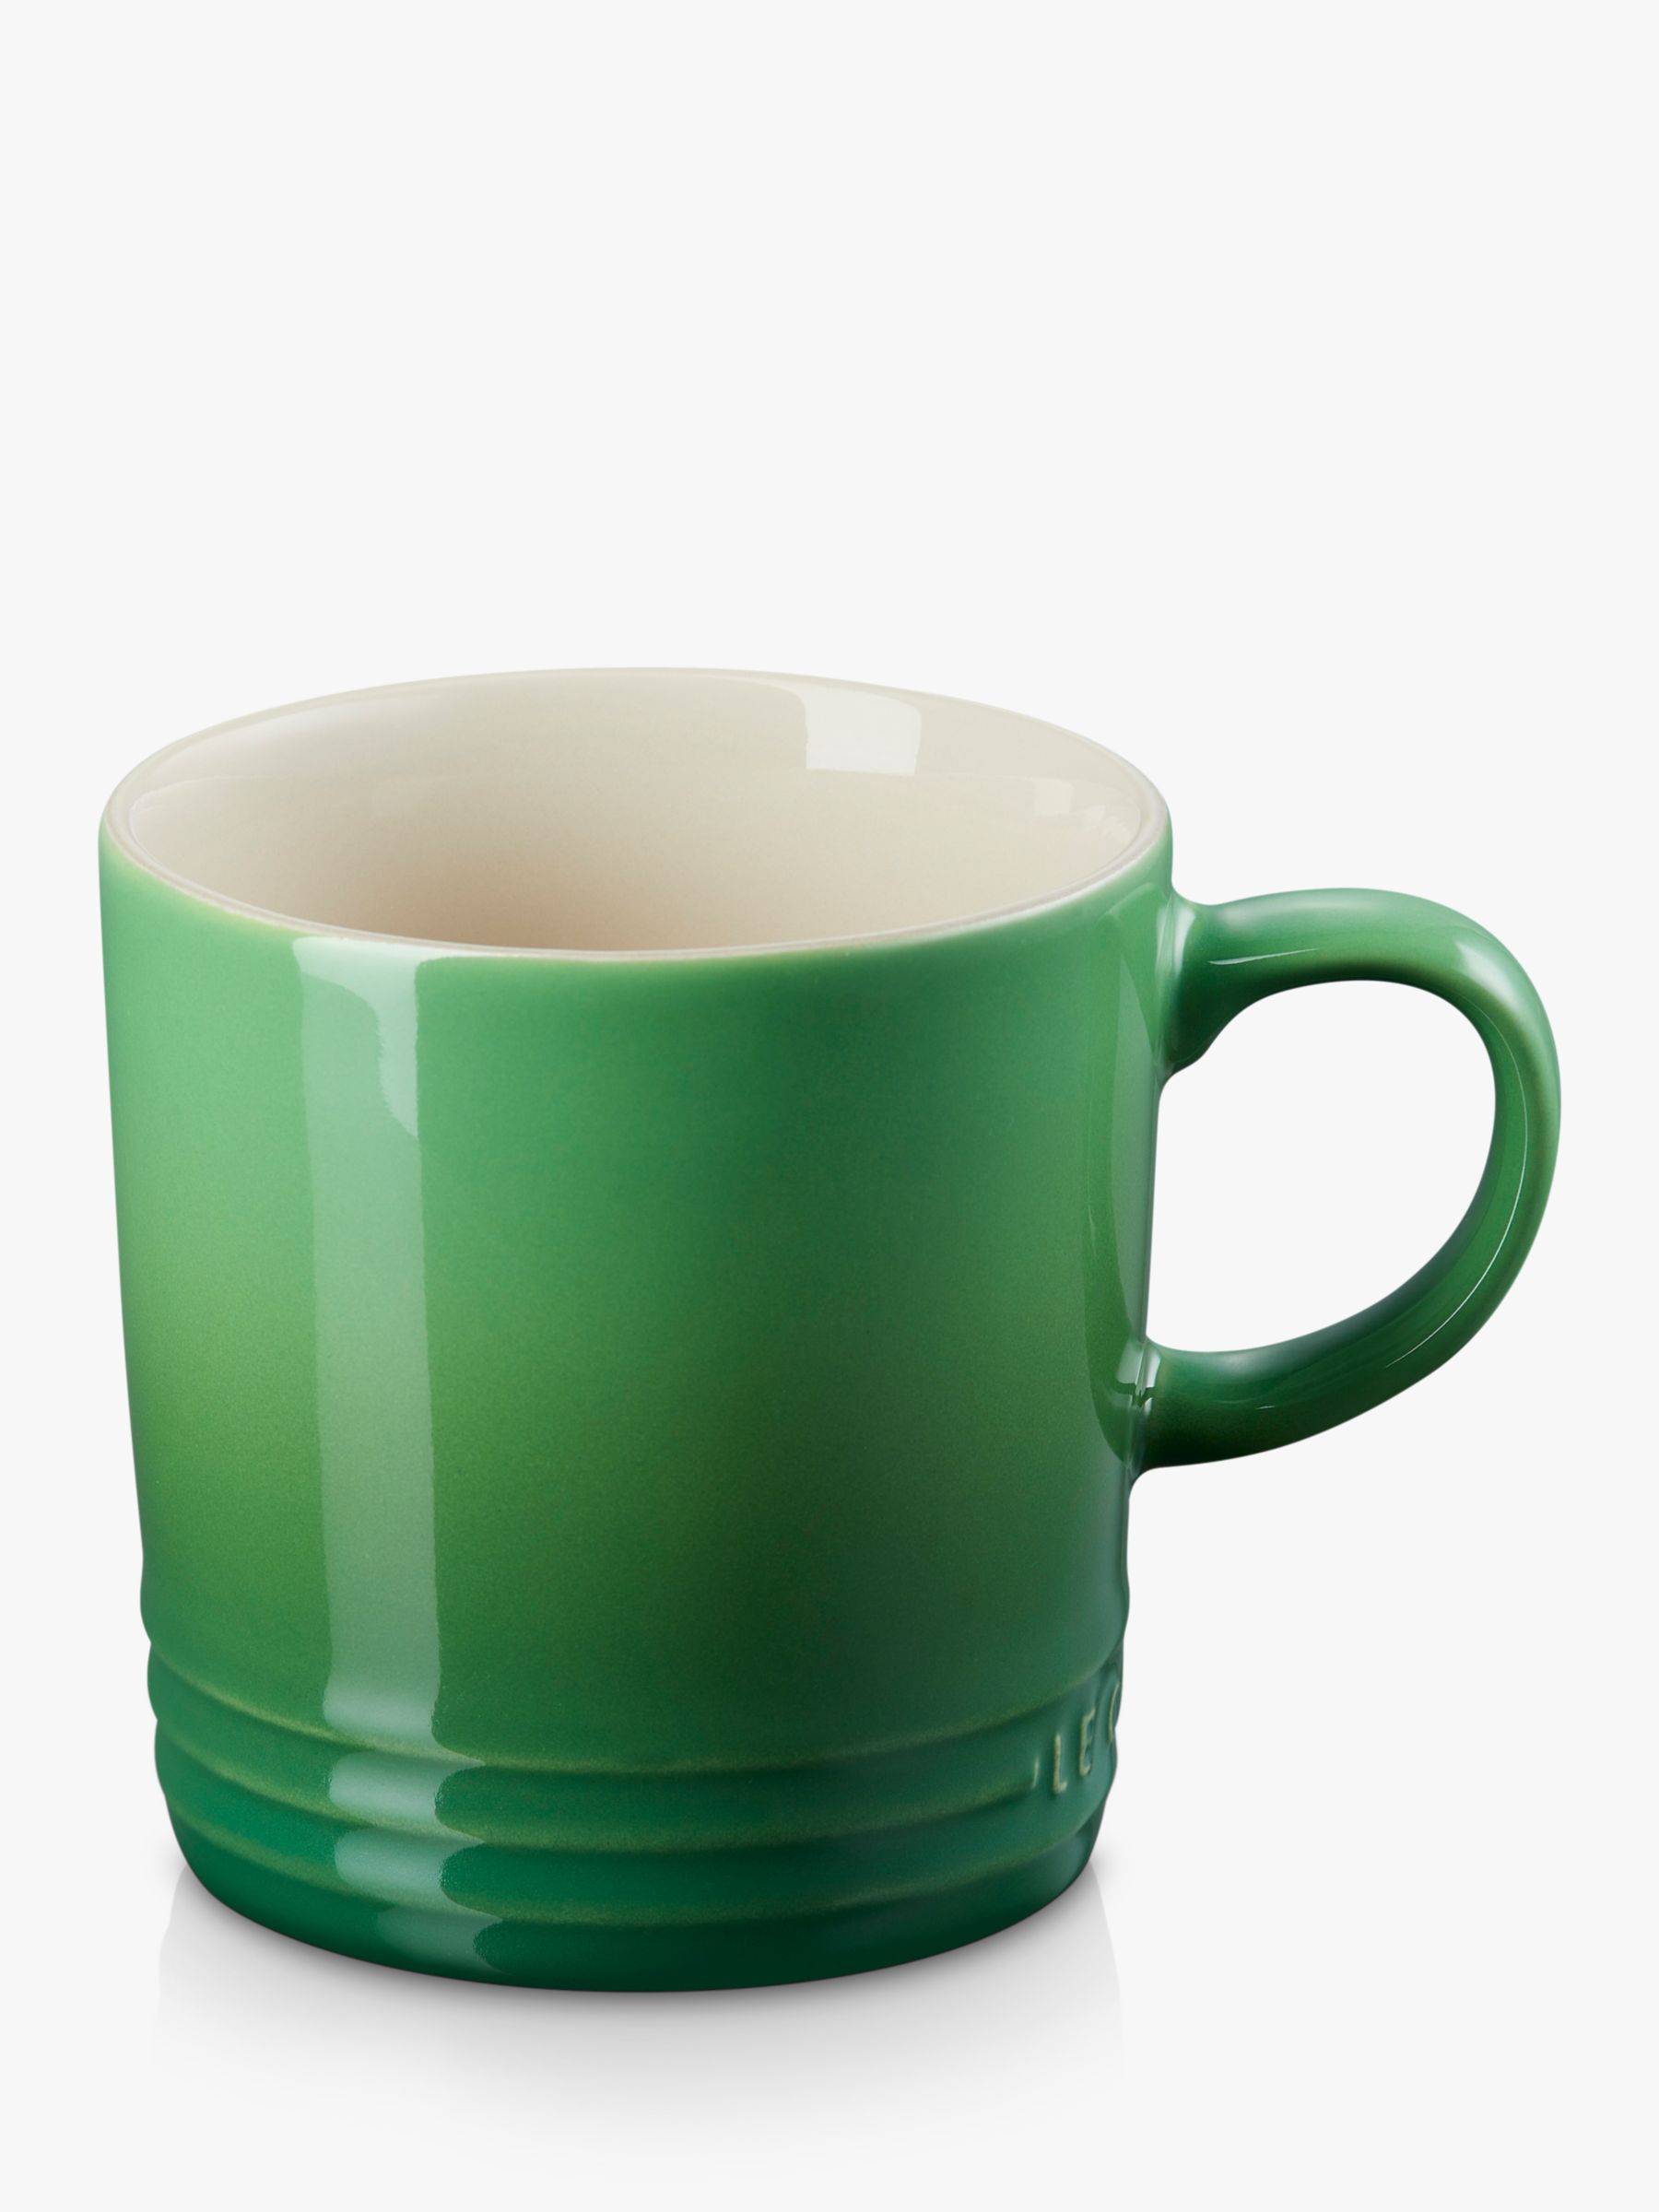 Coffee Mug: Buy Country Bean Green Coffee Mug 330ml Online in India